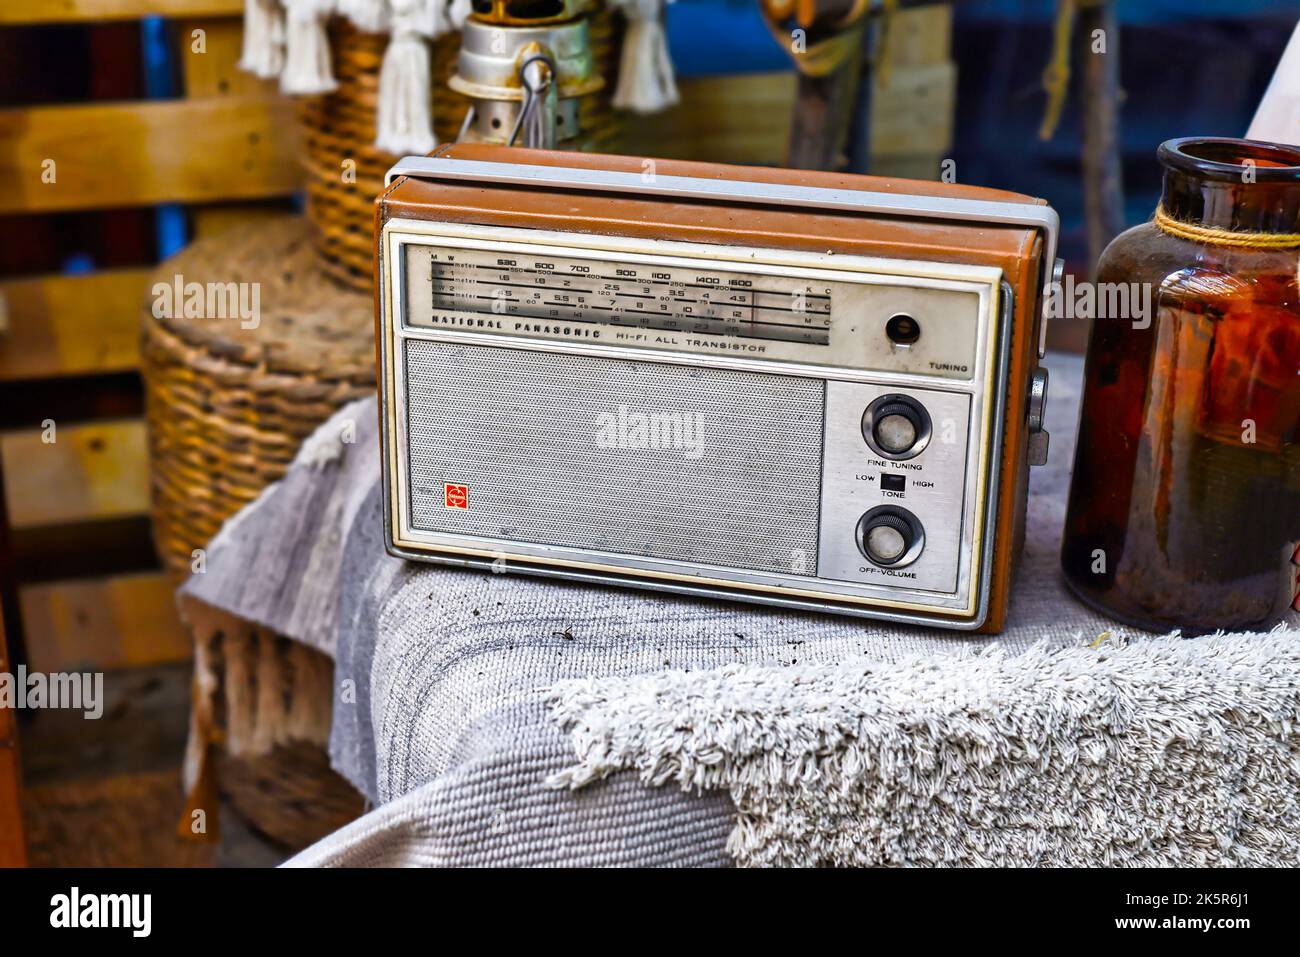 Nha Trang, Khanh Hoa, Vietnam - 19. September 2022: Alte Radiomarke Panasonic auf dem Tisch Stockfoto